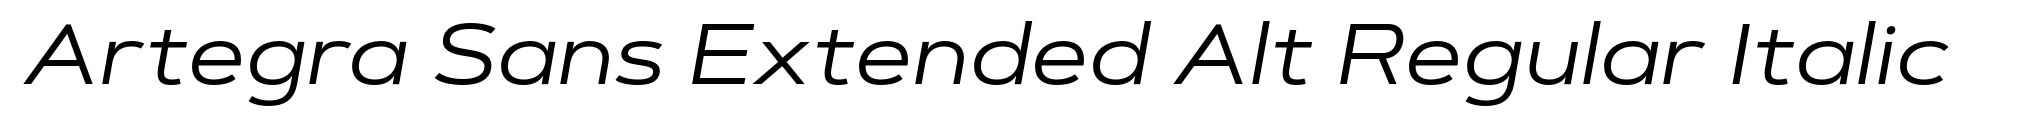 Artegra Sans Extended Alt Regular Italic image